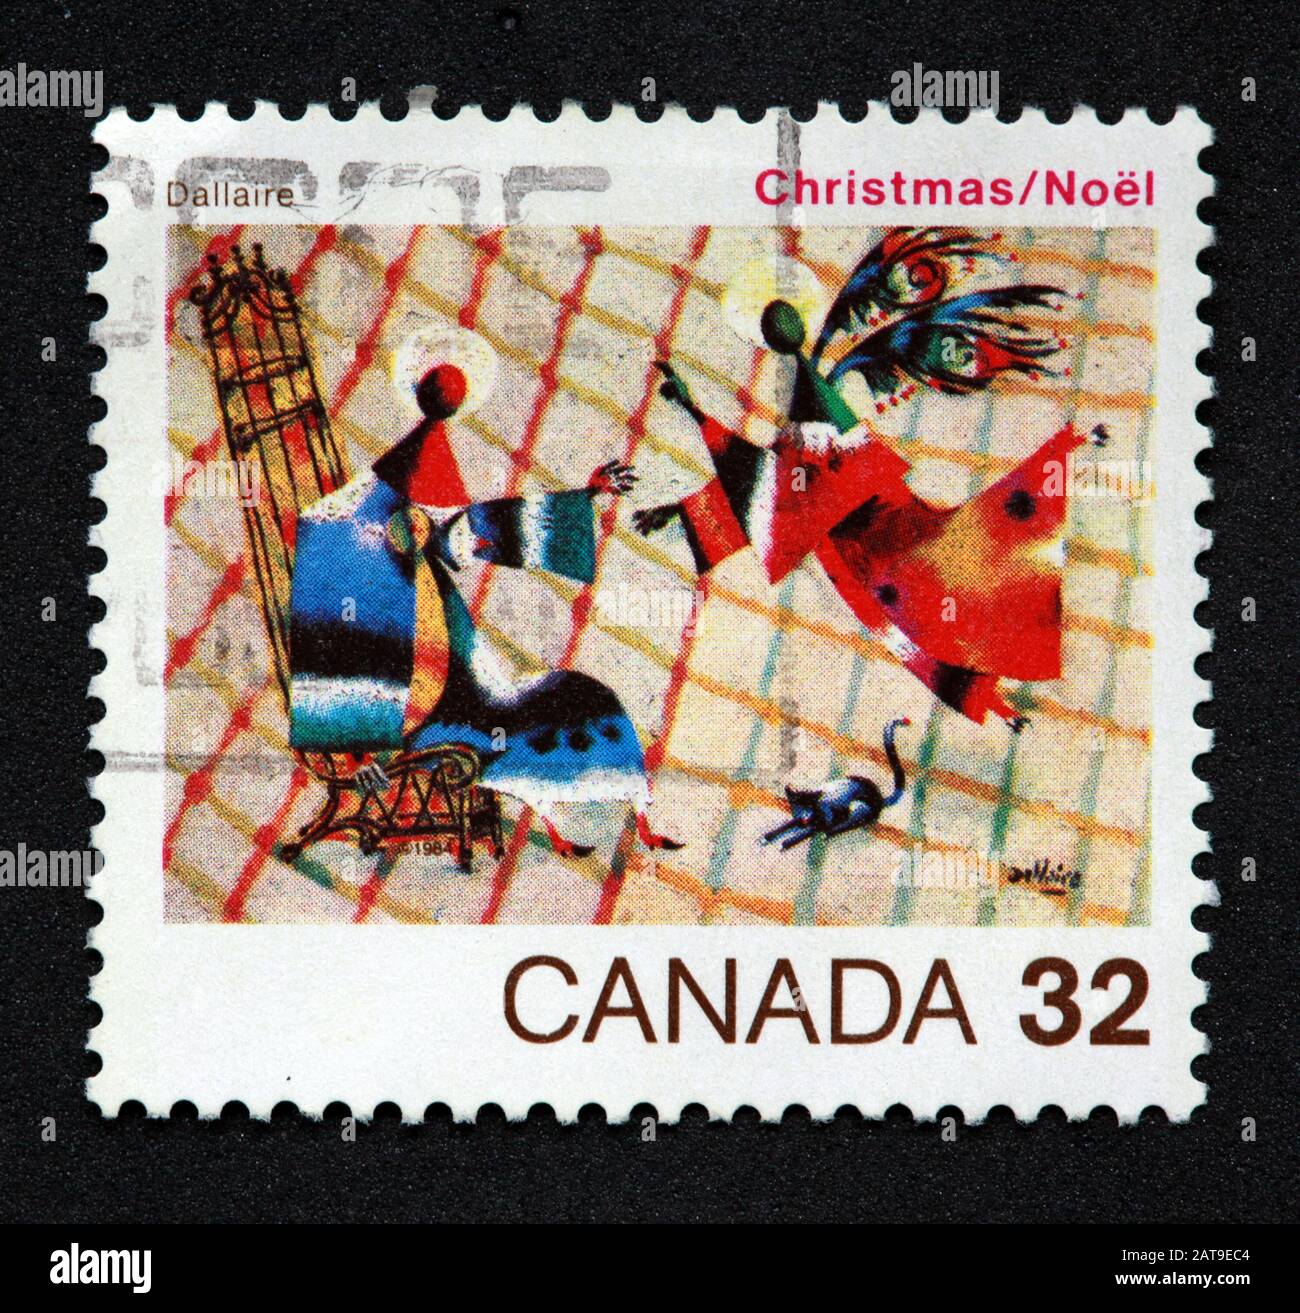 Canadian Stamp, Canada Stamp, Canada Post, usato Stamp, Canada 32c, Natale , Noel, Dallaire , angeli Foto Stock